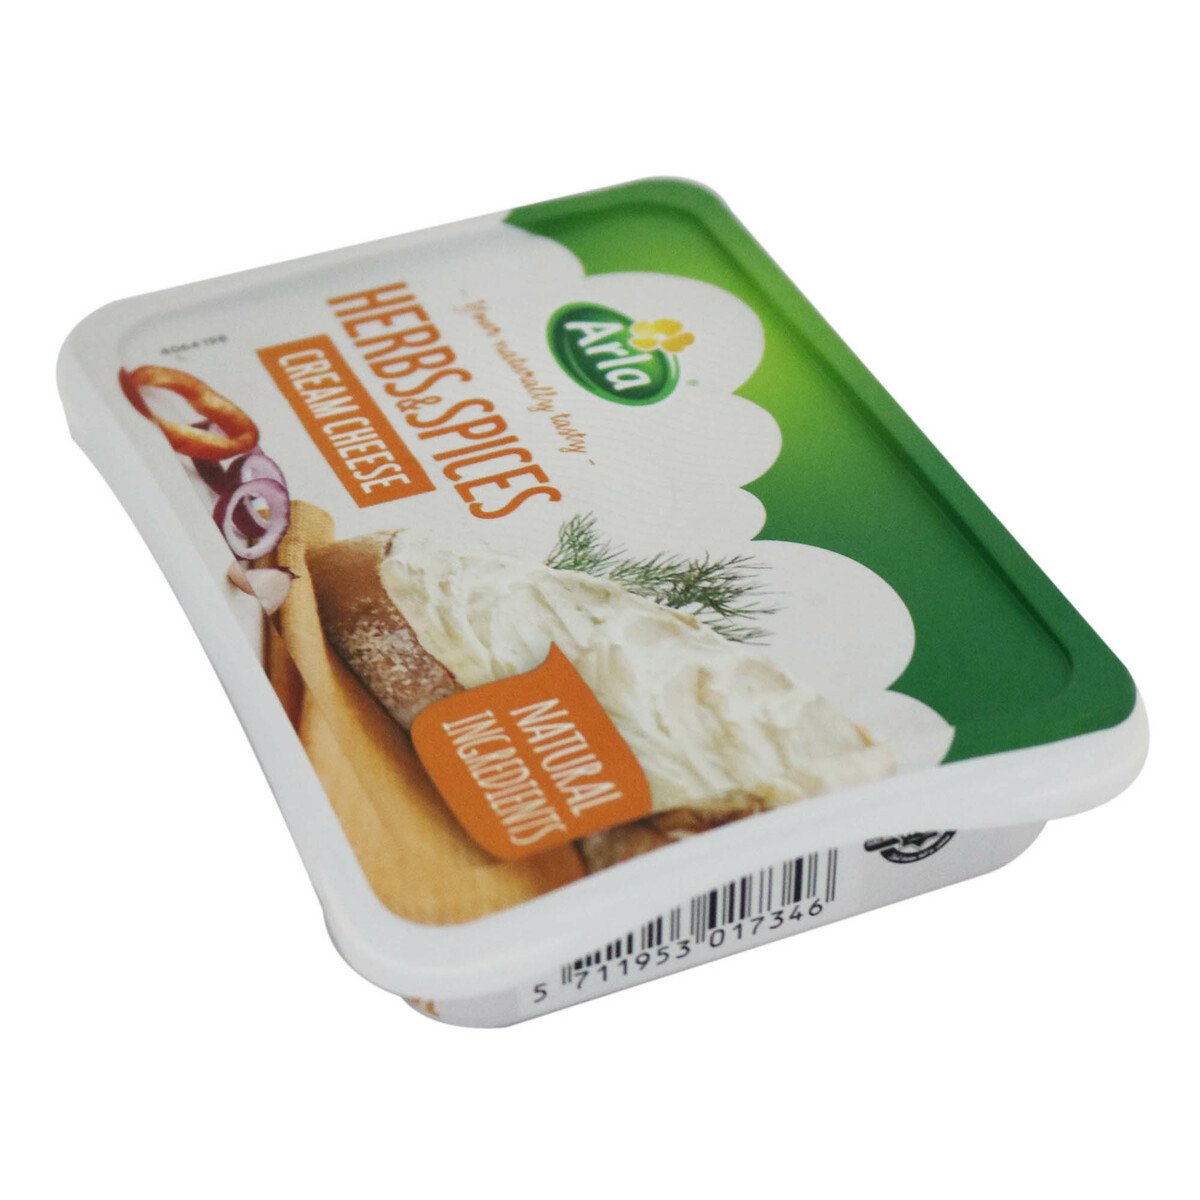 Arla Herbs & Spics Cream Cheese 150g